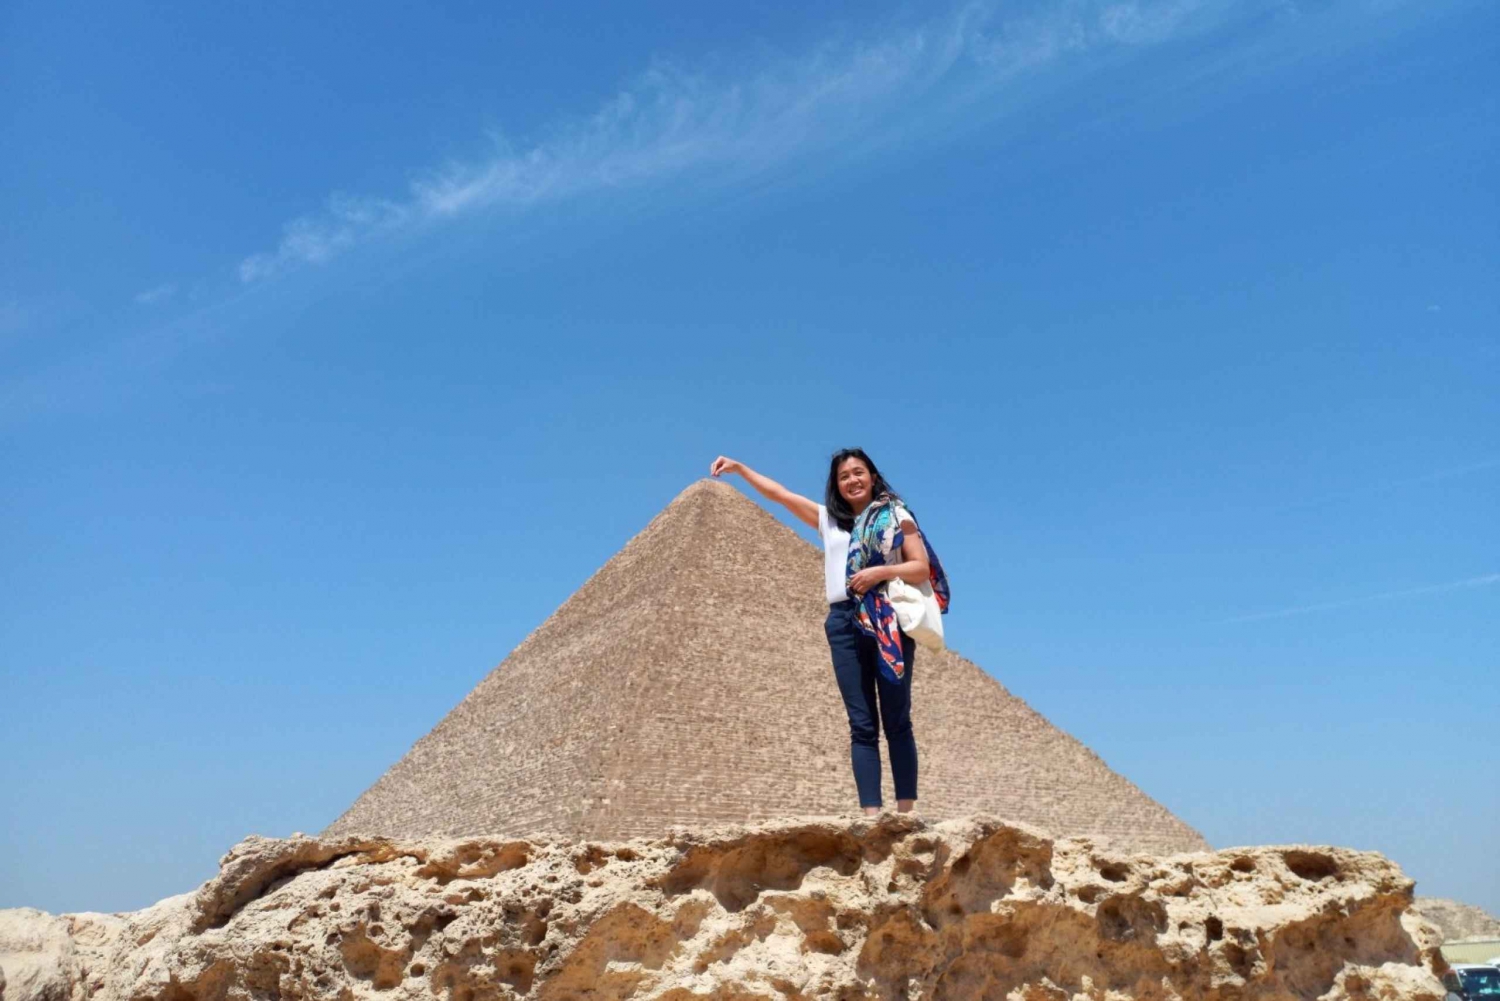 Von Kairo/Gizeh aus: Sakkara, Memphis und Gizeh Pyramiden Tagestour